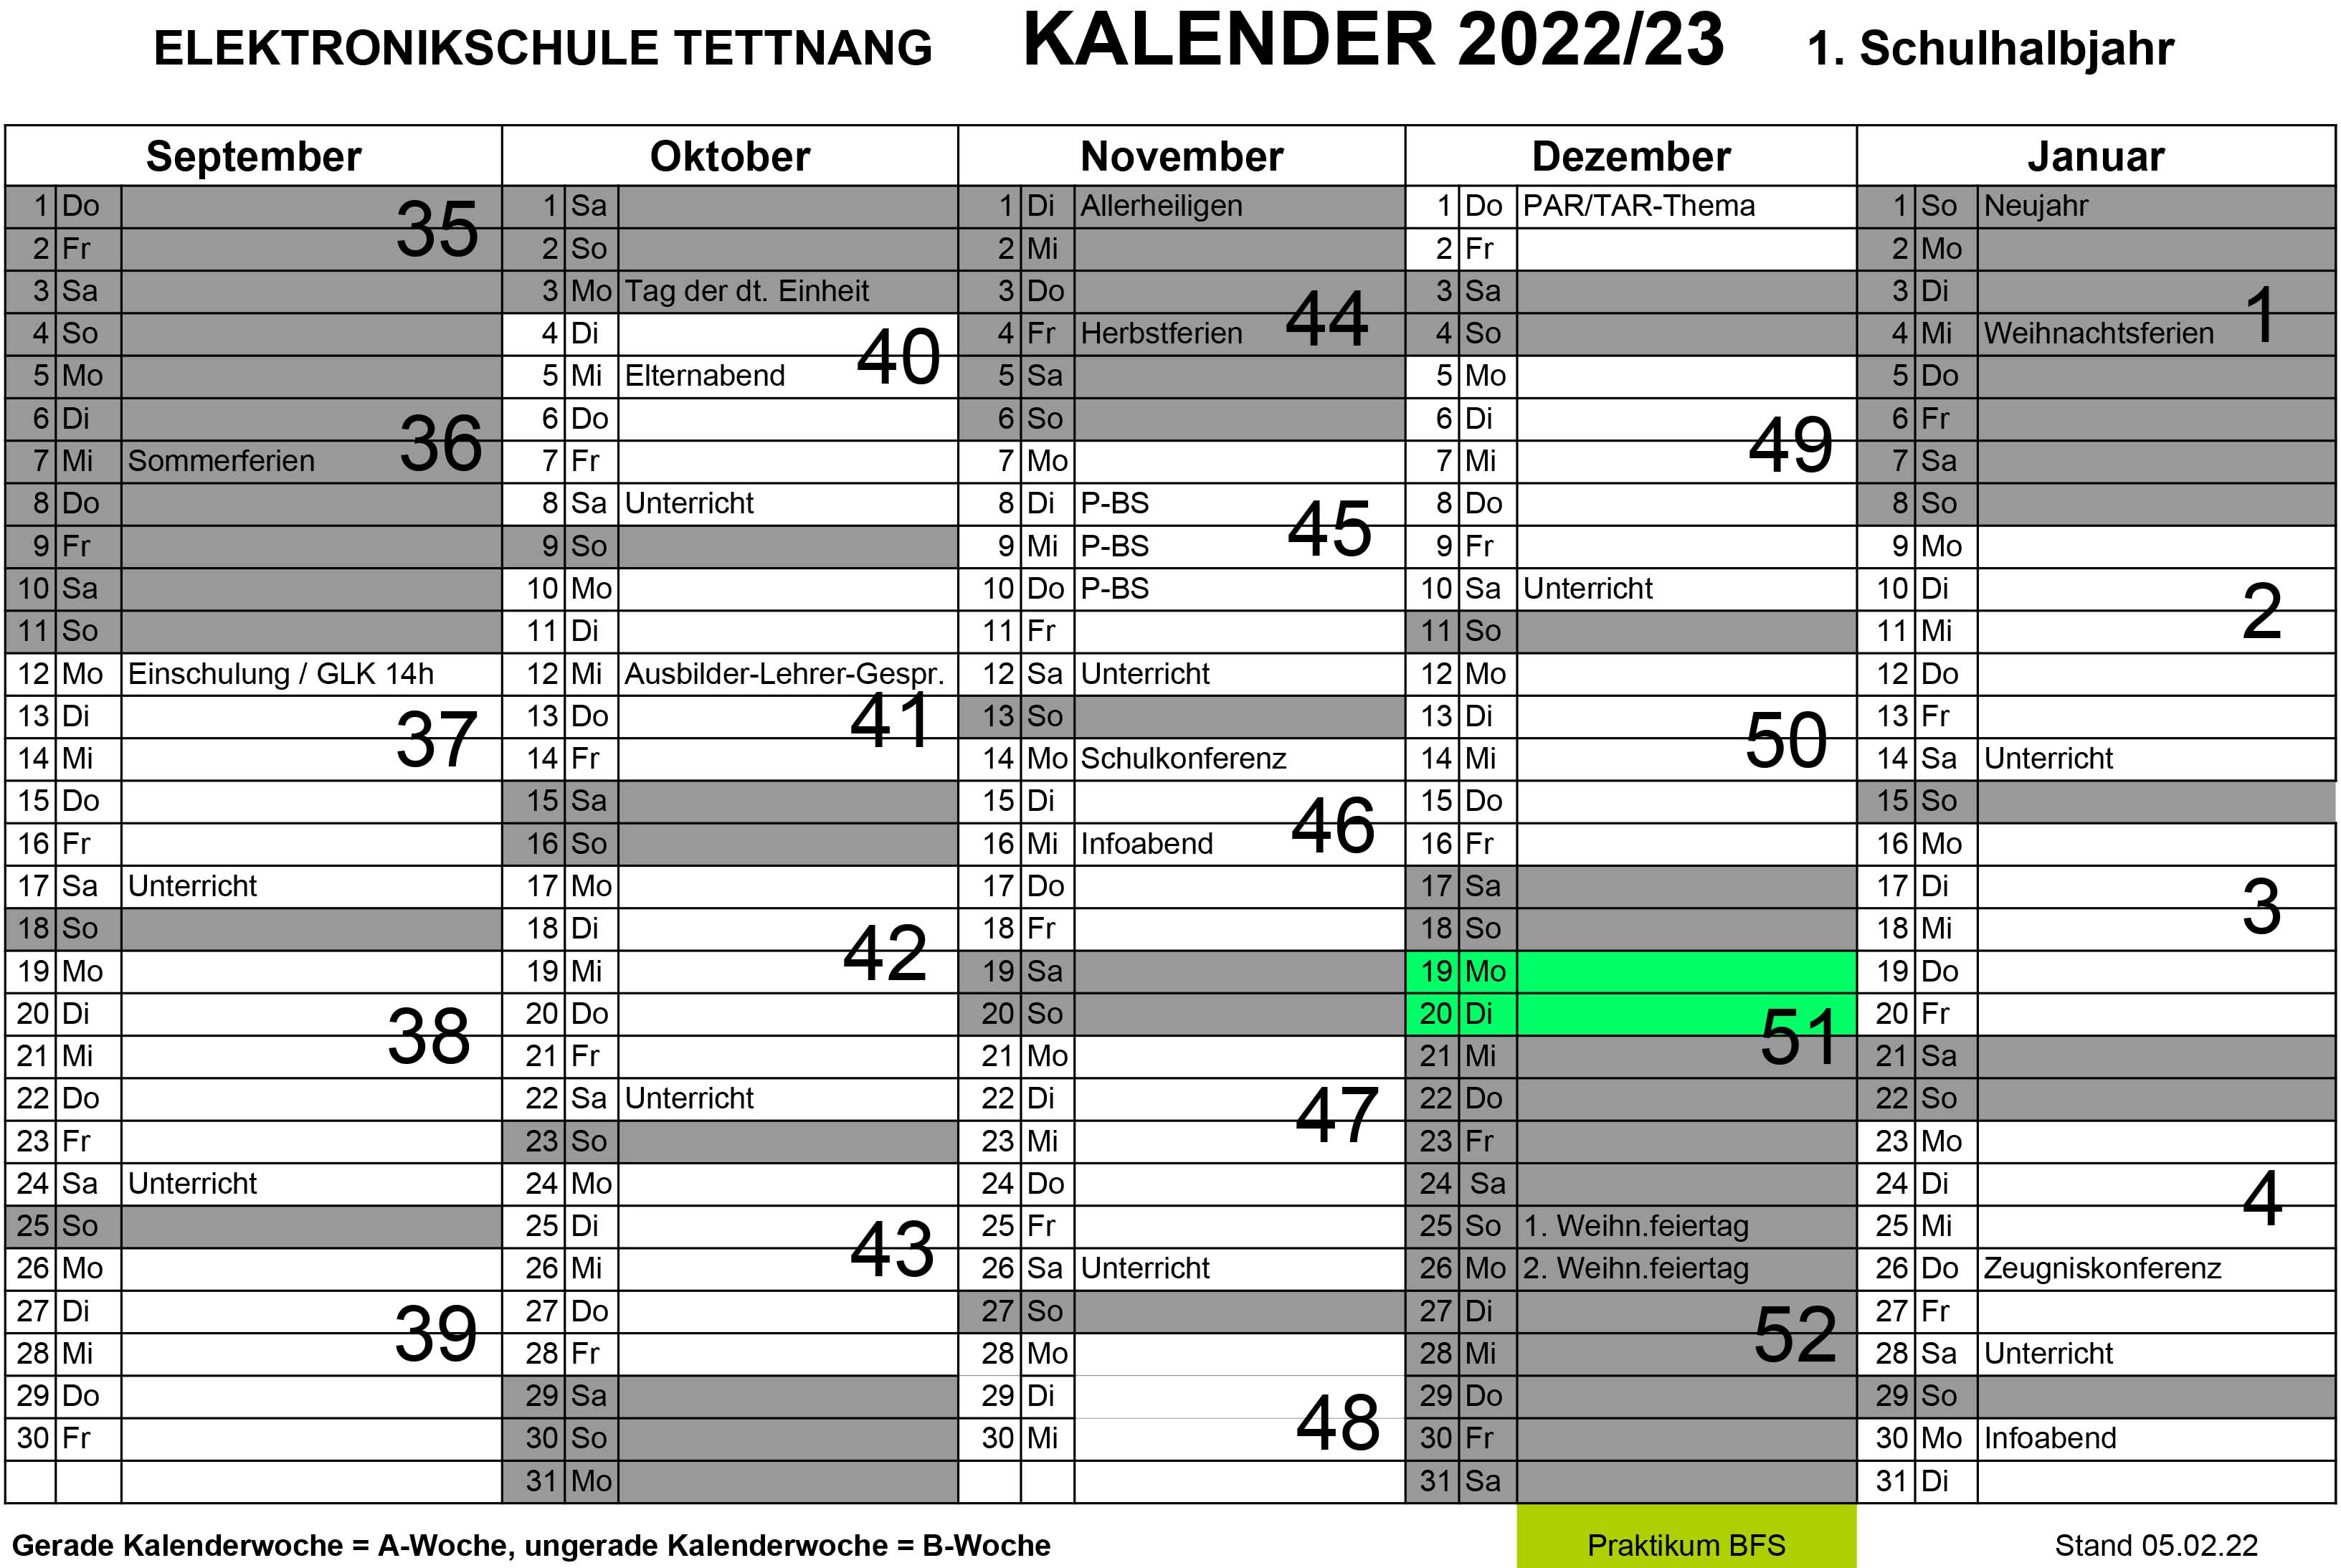 EST KALENDER 2022 23 220205